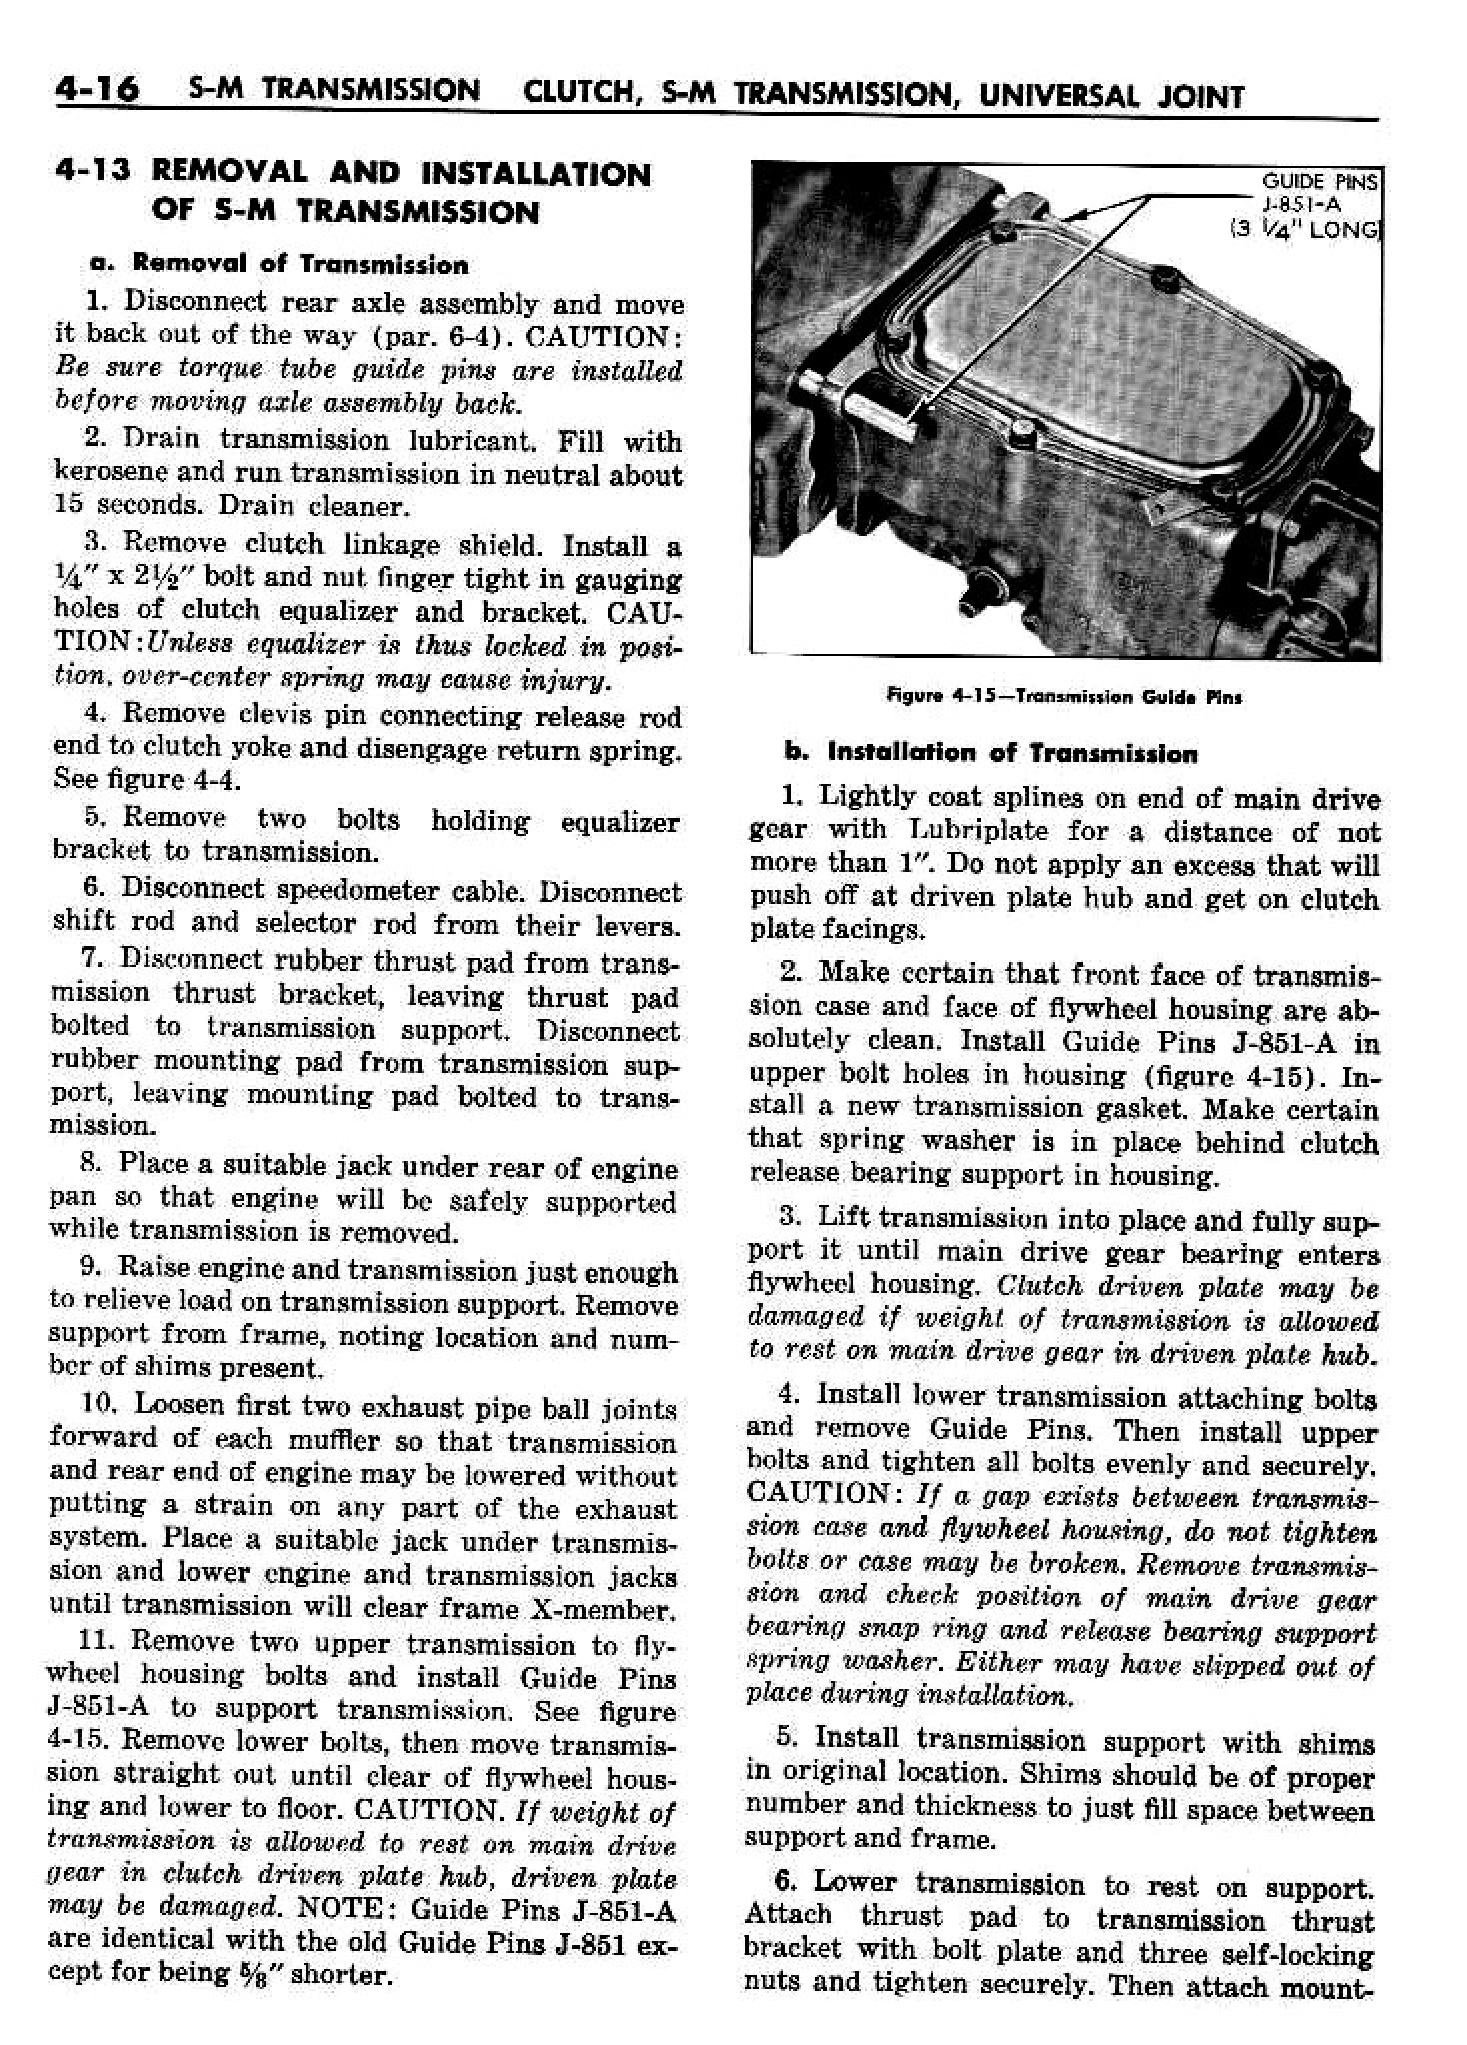 n_05 1958 Buick Shop Manual - Clutch & Man Trans_16.jpg